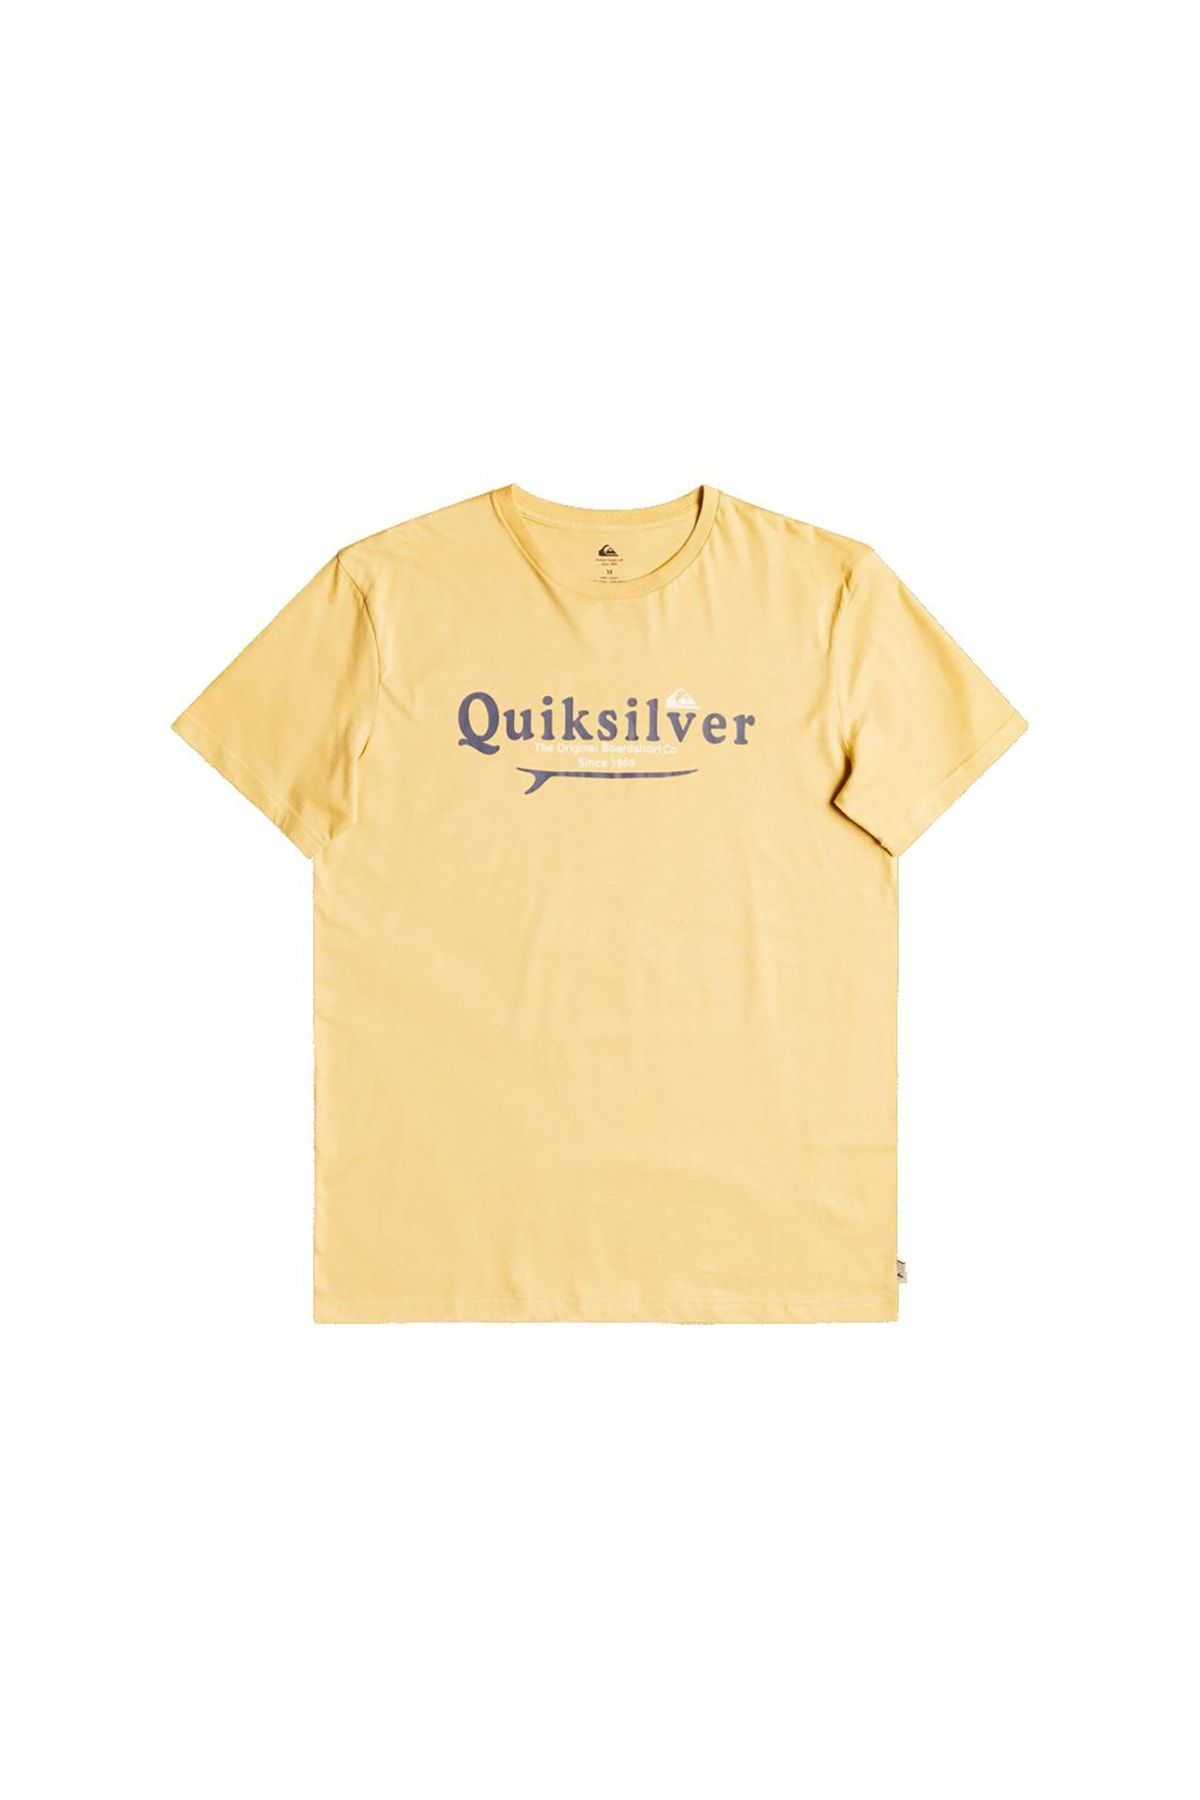 Quiksilver Silver Lining Ss Erkek Kısa Kollu T-shirt Sarı